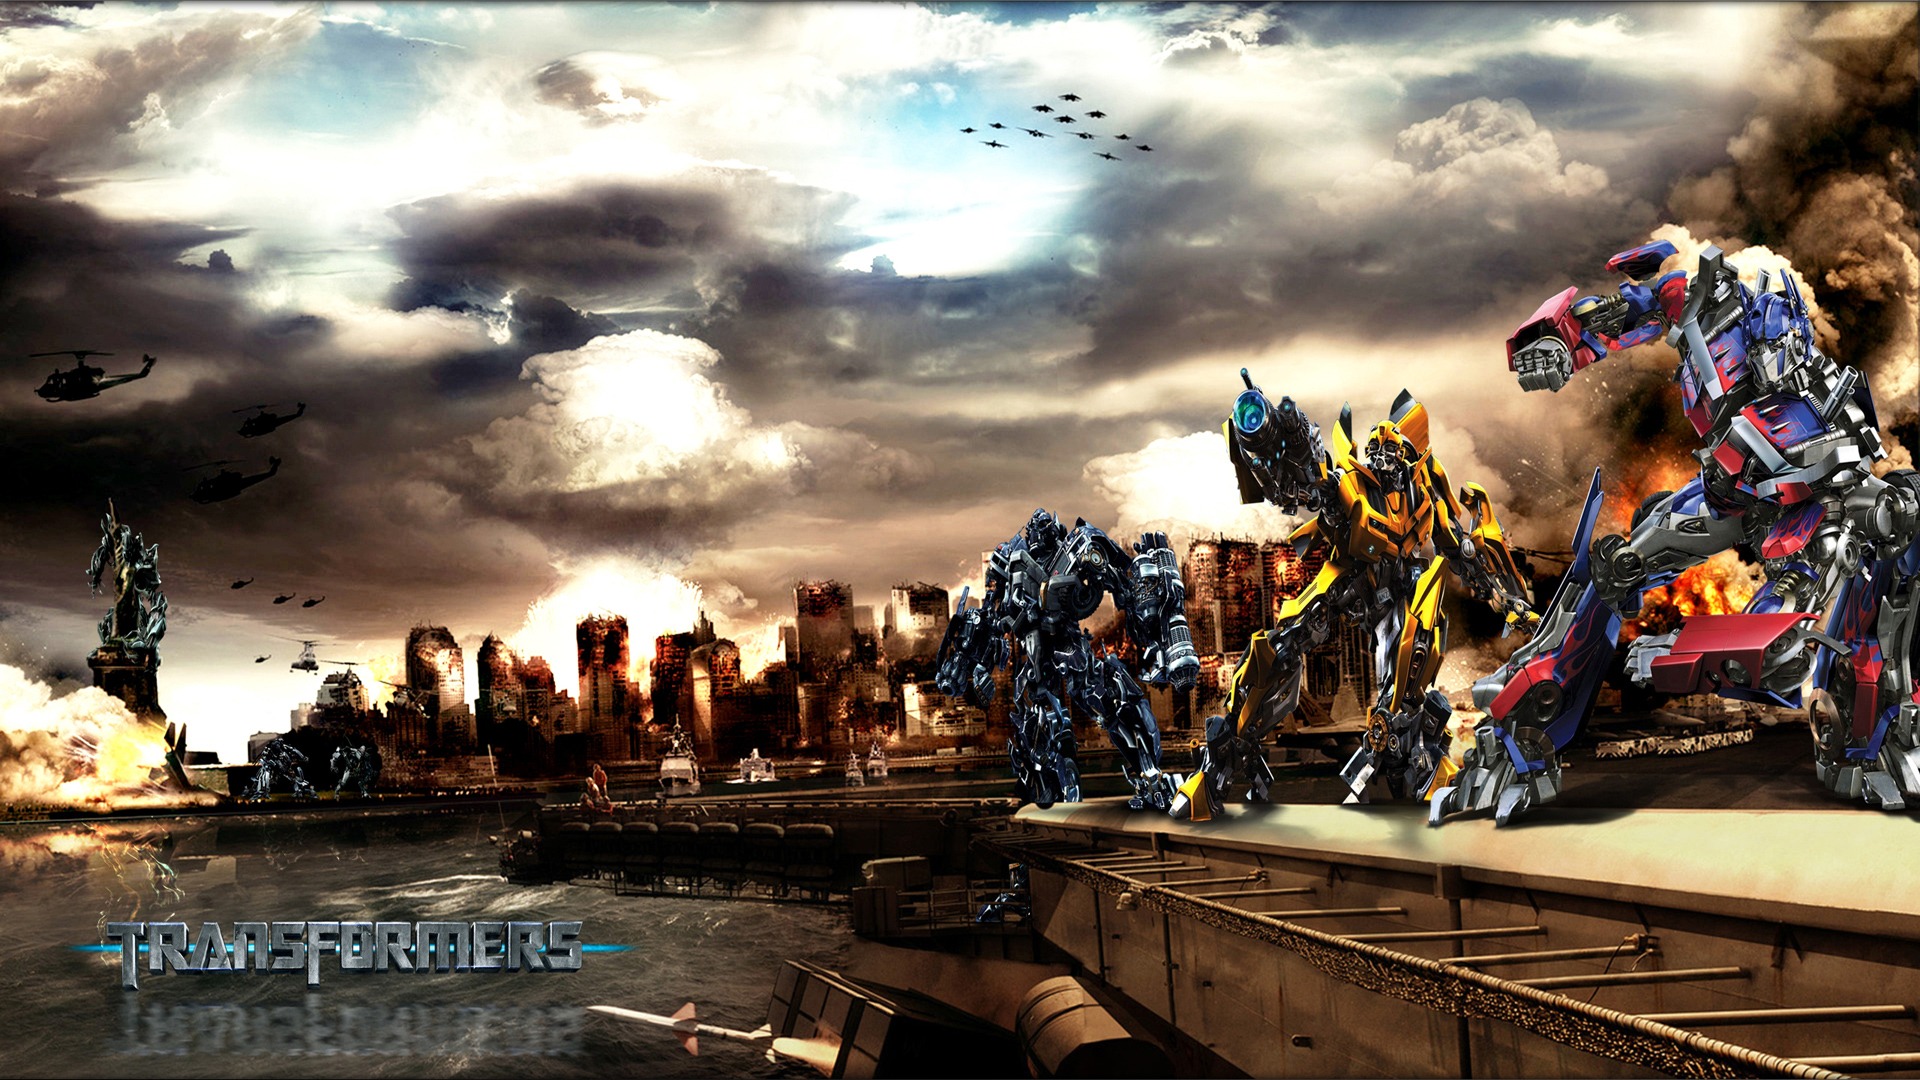 Full HD Wallpaper Of Transformers Image Amp